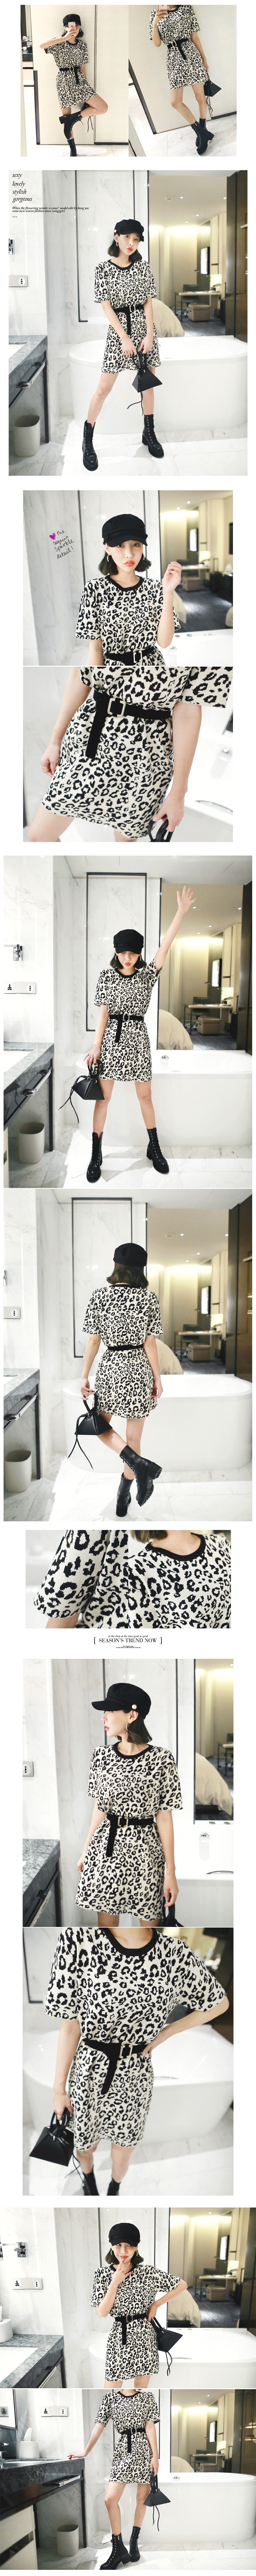 [KOREA] Leopard Sweater Dress #Beige&amp;Black One Size(S-M) [免费配送]